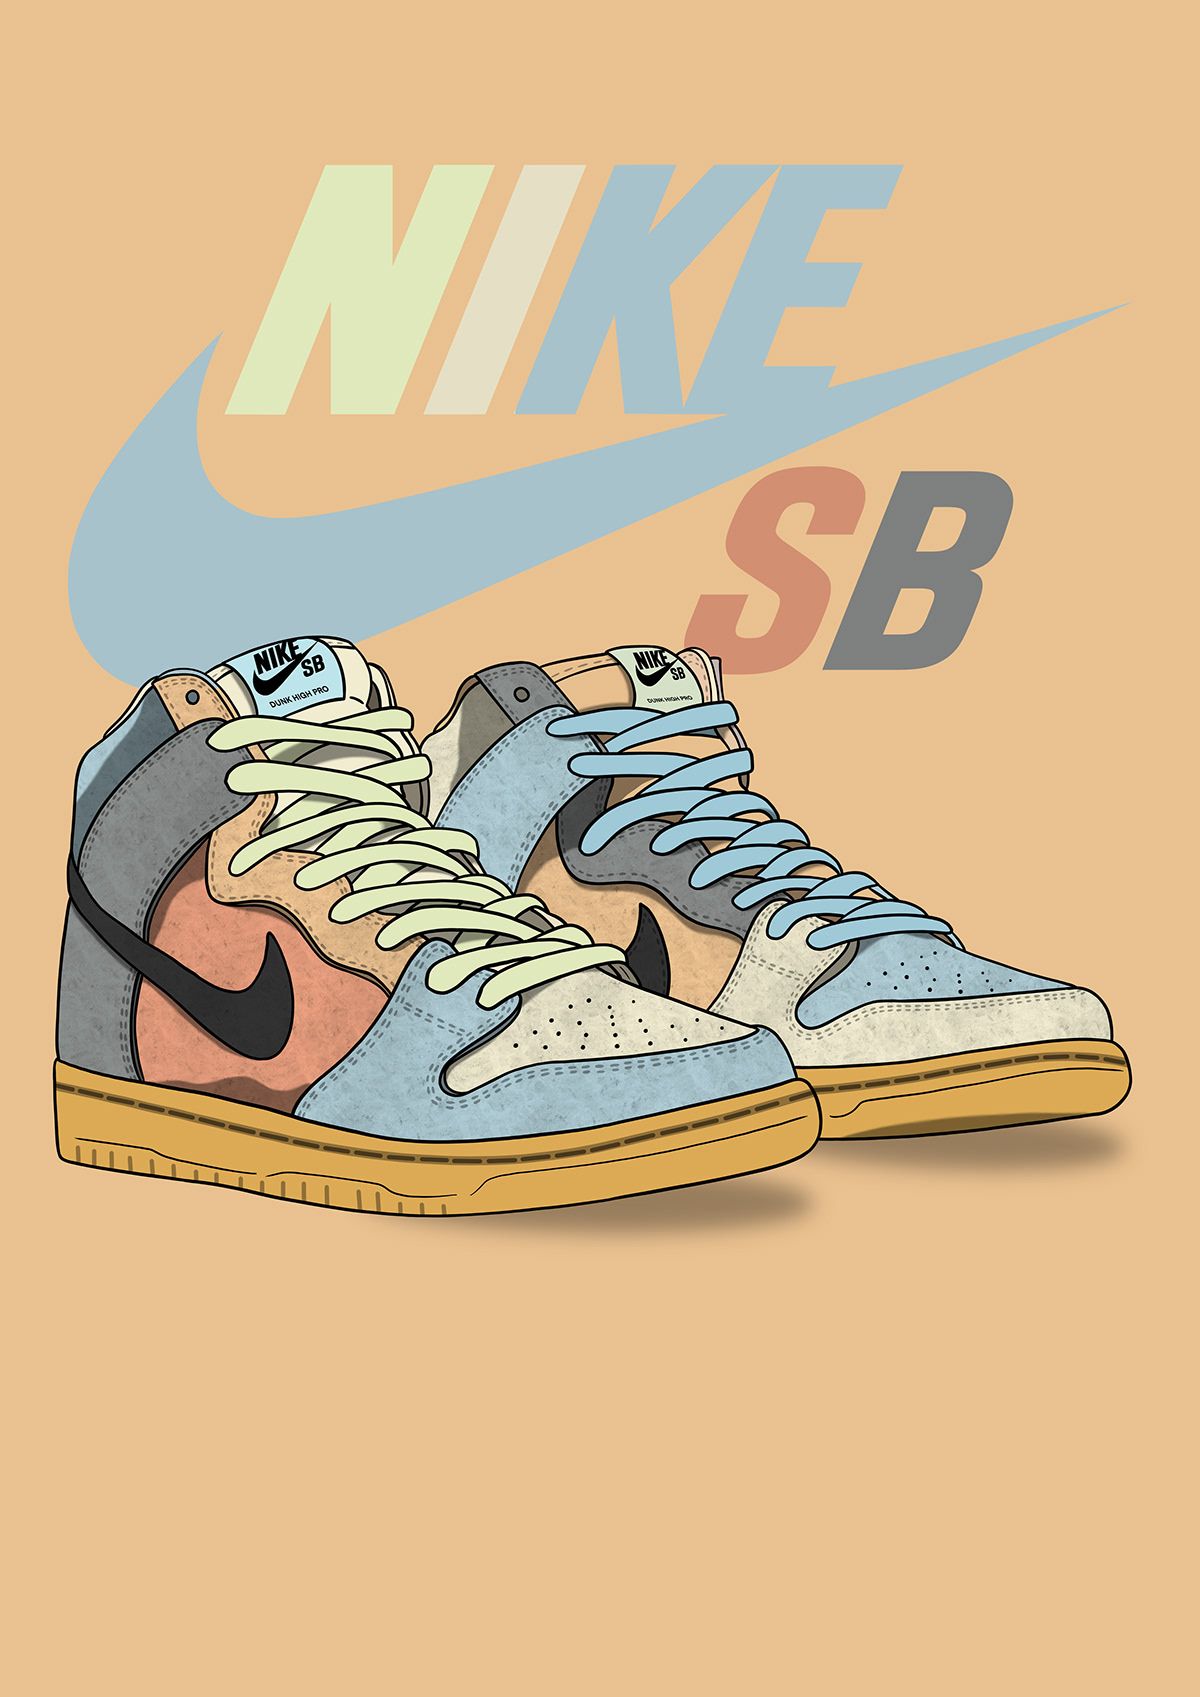 Nike Sb Dunk High Spectrum On Sneakers Wallpaper